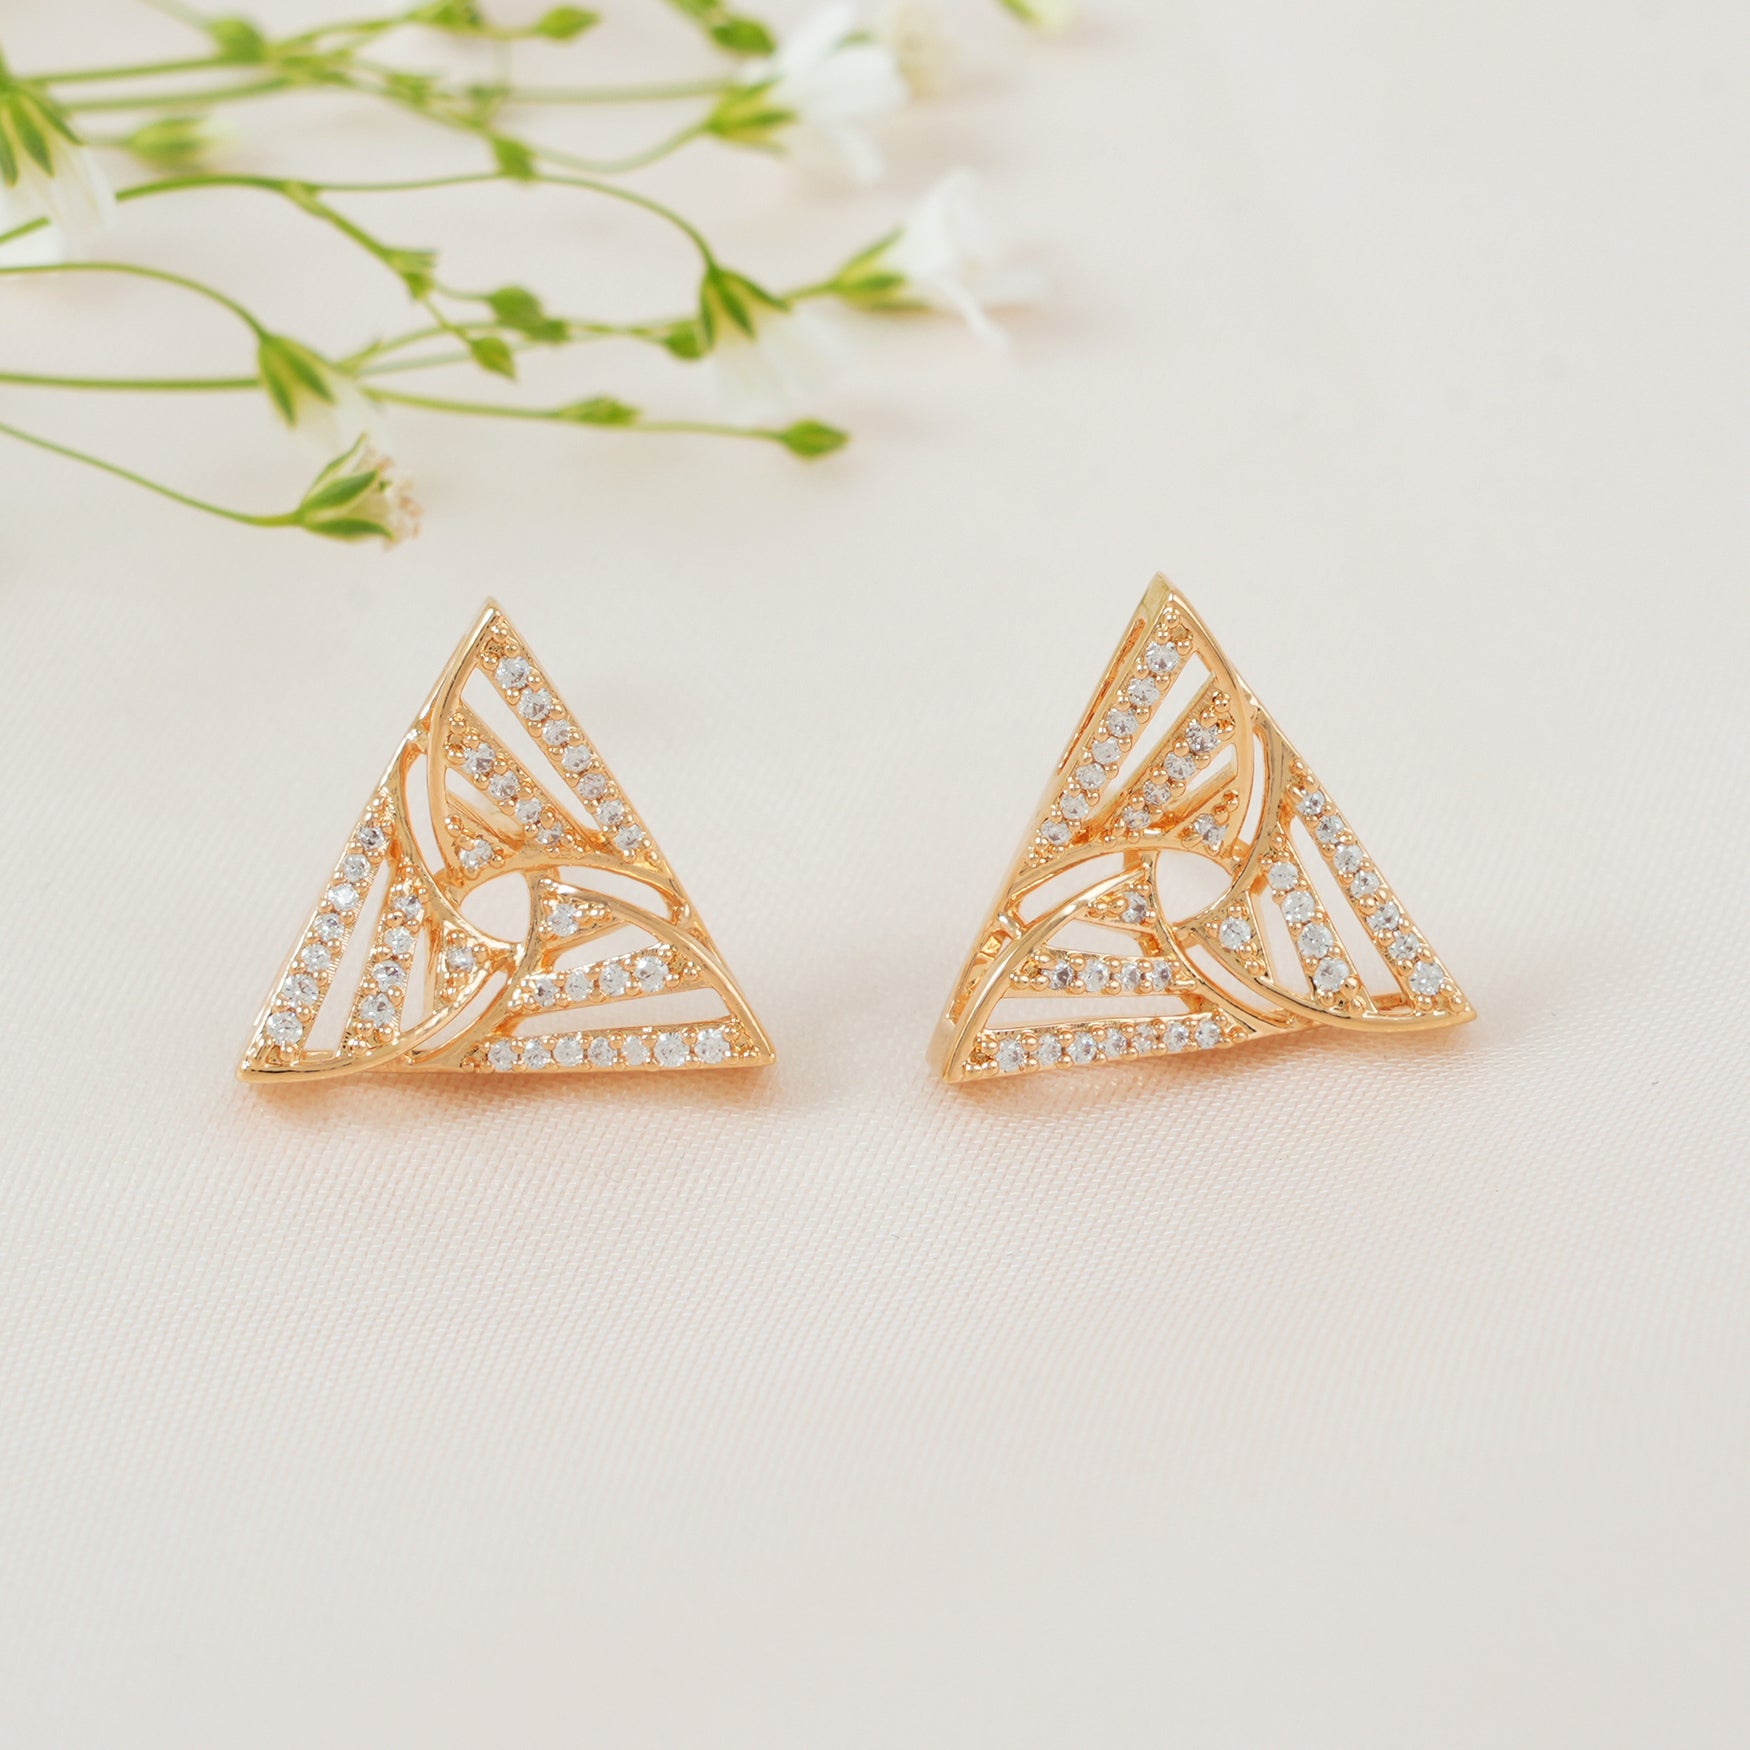 Beautiful delicate Diamond studded pendant set with stud earring